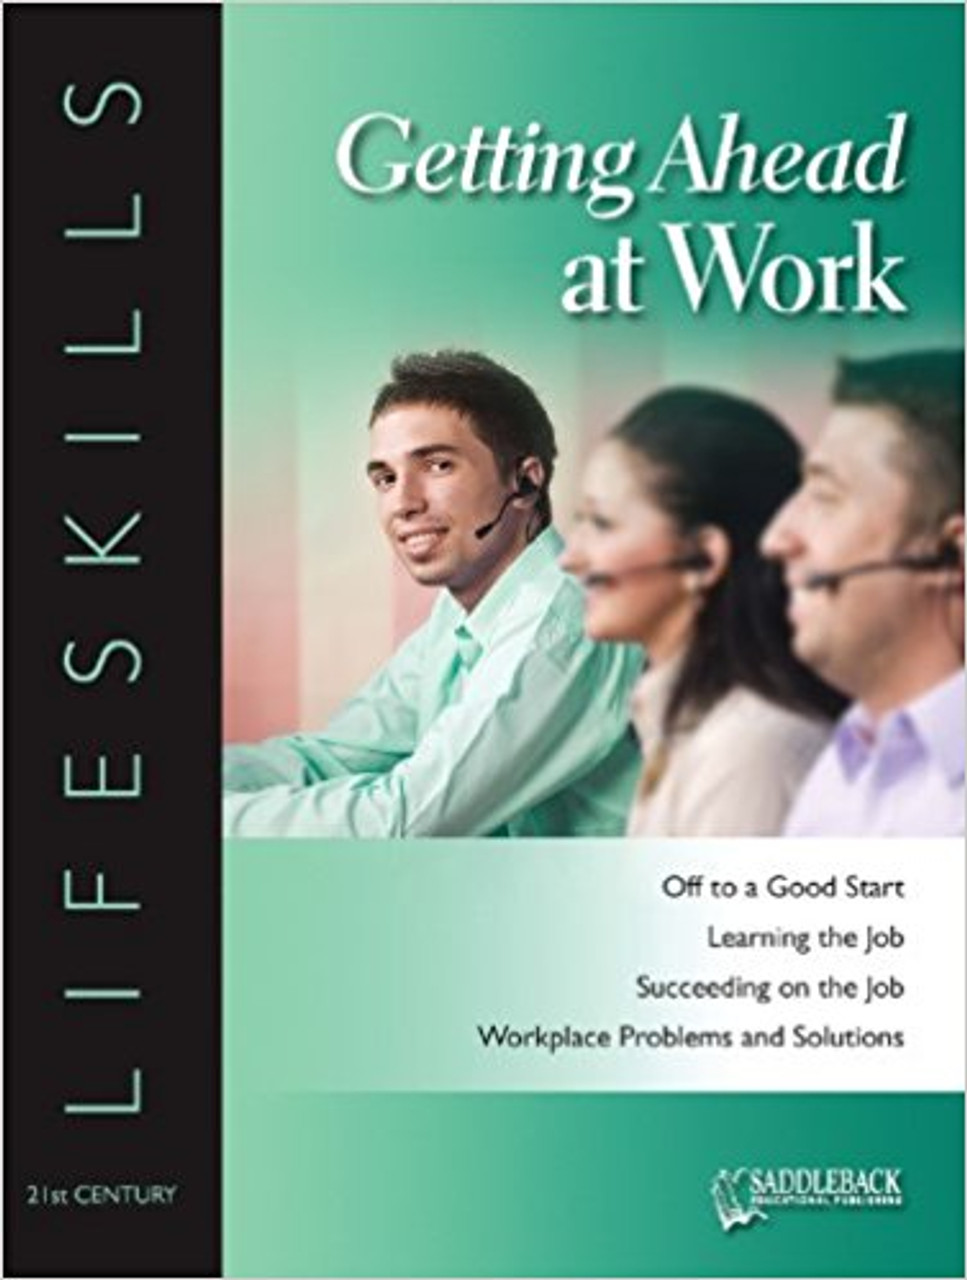 Getting Ahead at Work Student Worktext - 21st Century Workskills